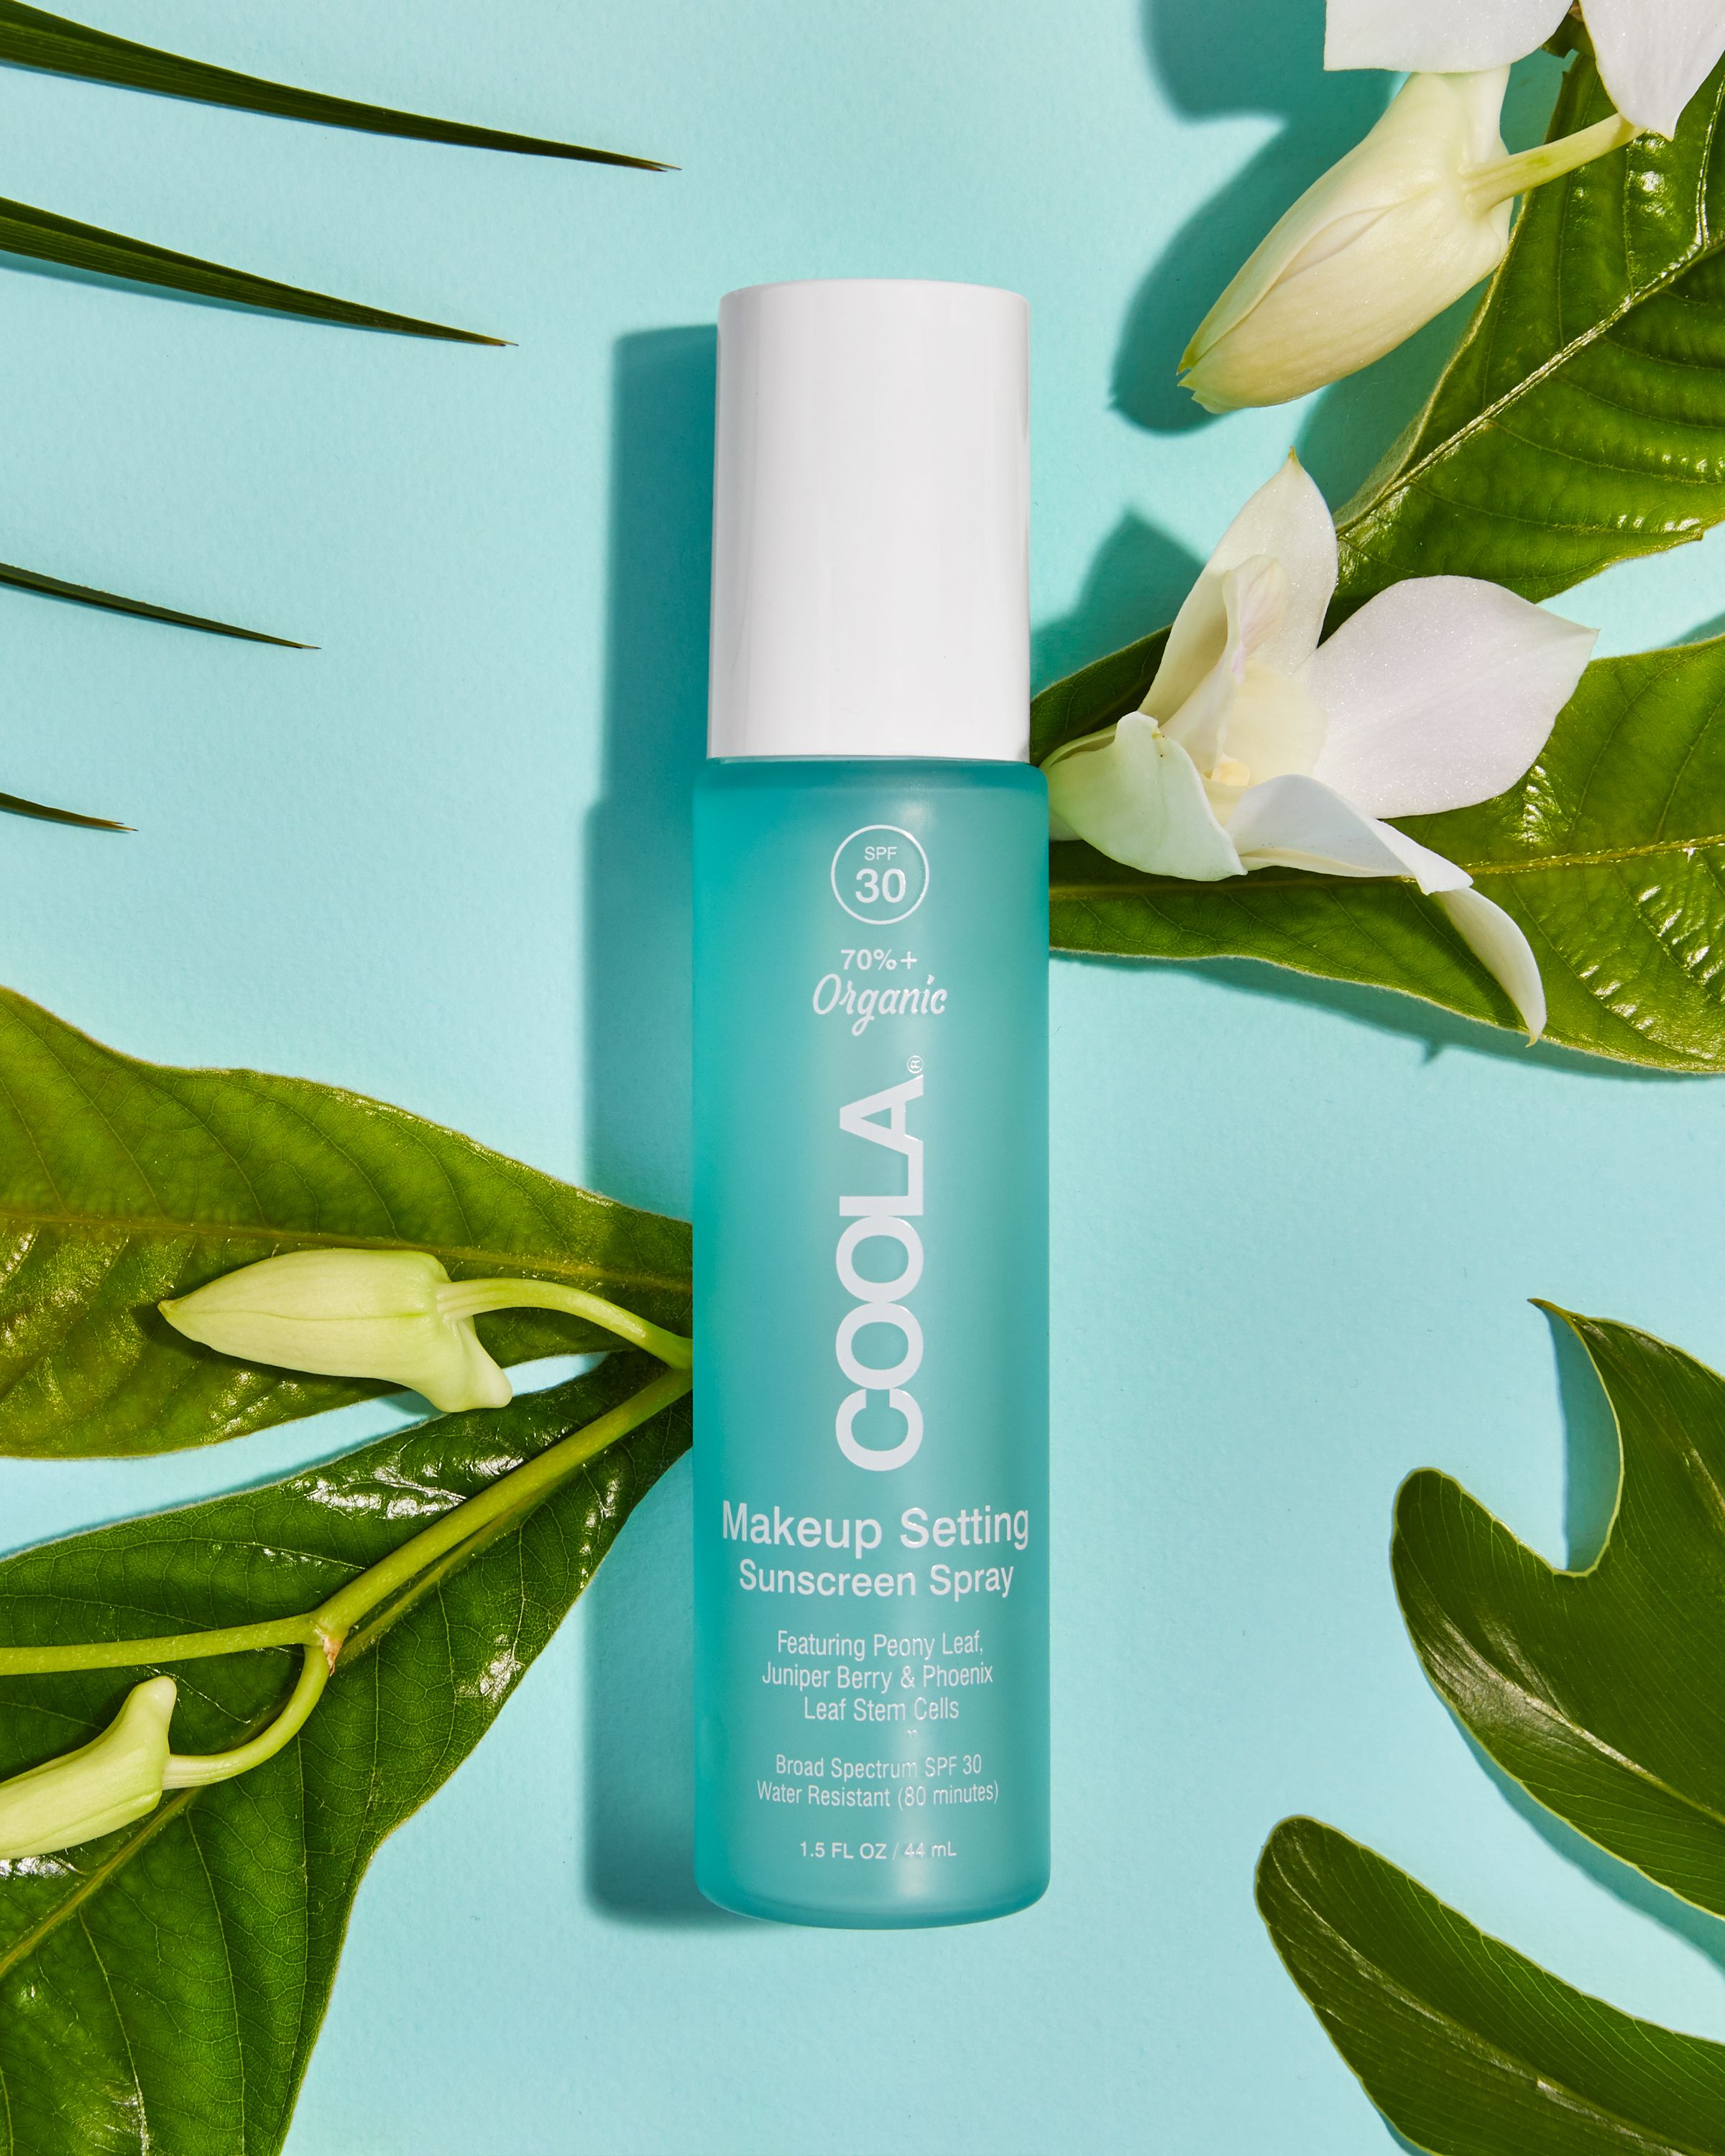 COOLA Classic Makeup Setting Spray Organic Sunscreen With Green Tea & Aloe, SPF 30 - 1.5 fl oz